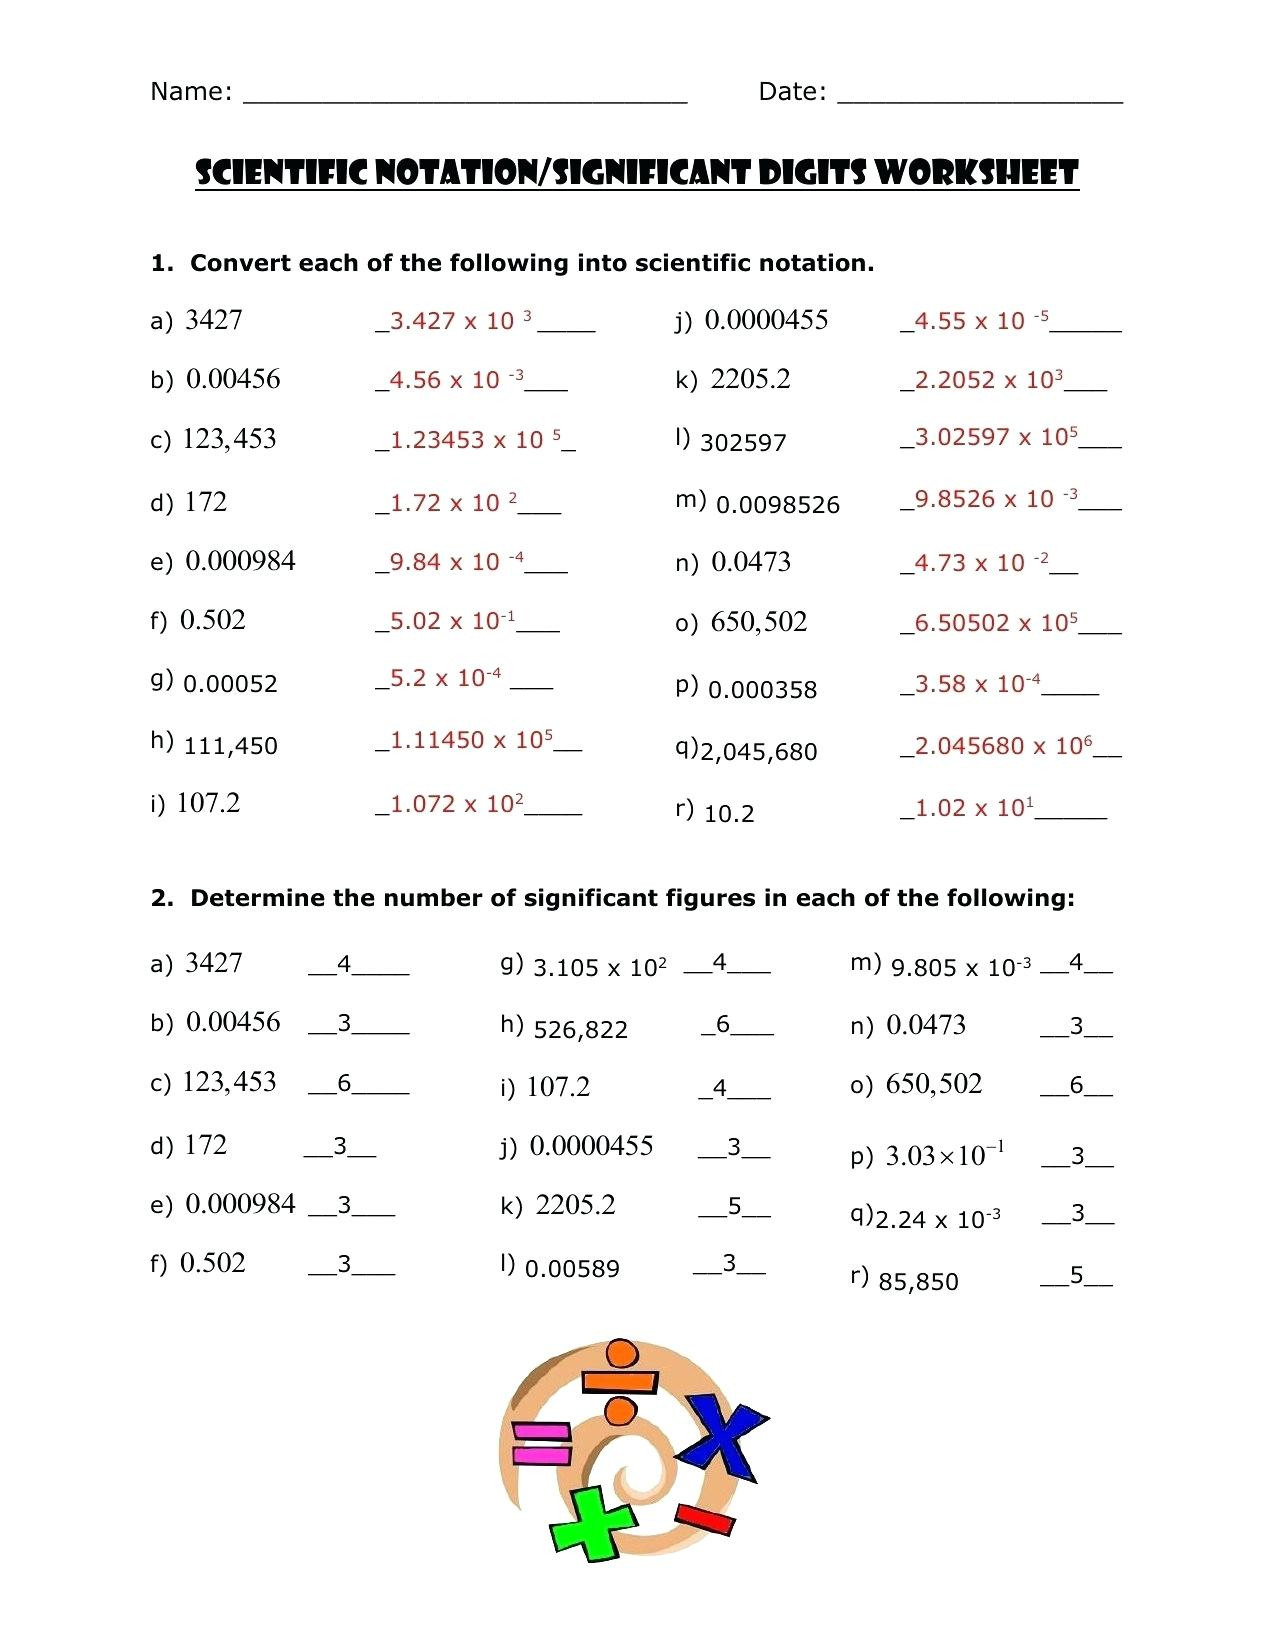 scientific-notation-worksheet-fun-beautiful-practice-best-db-excel